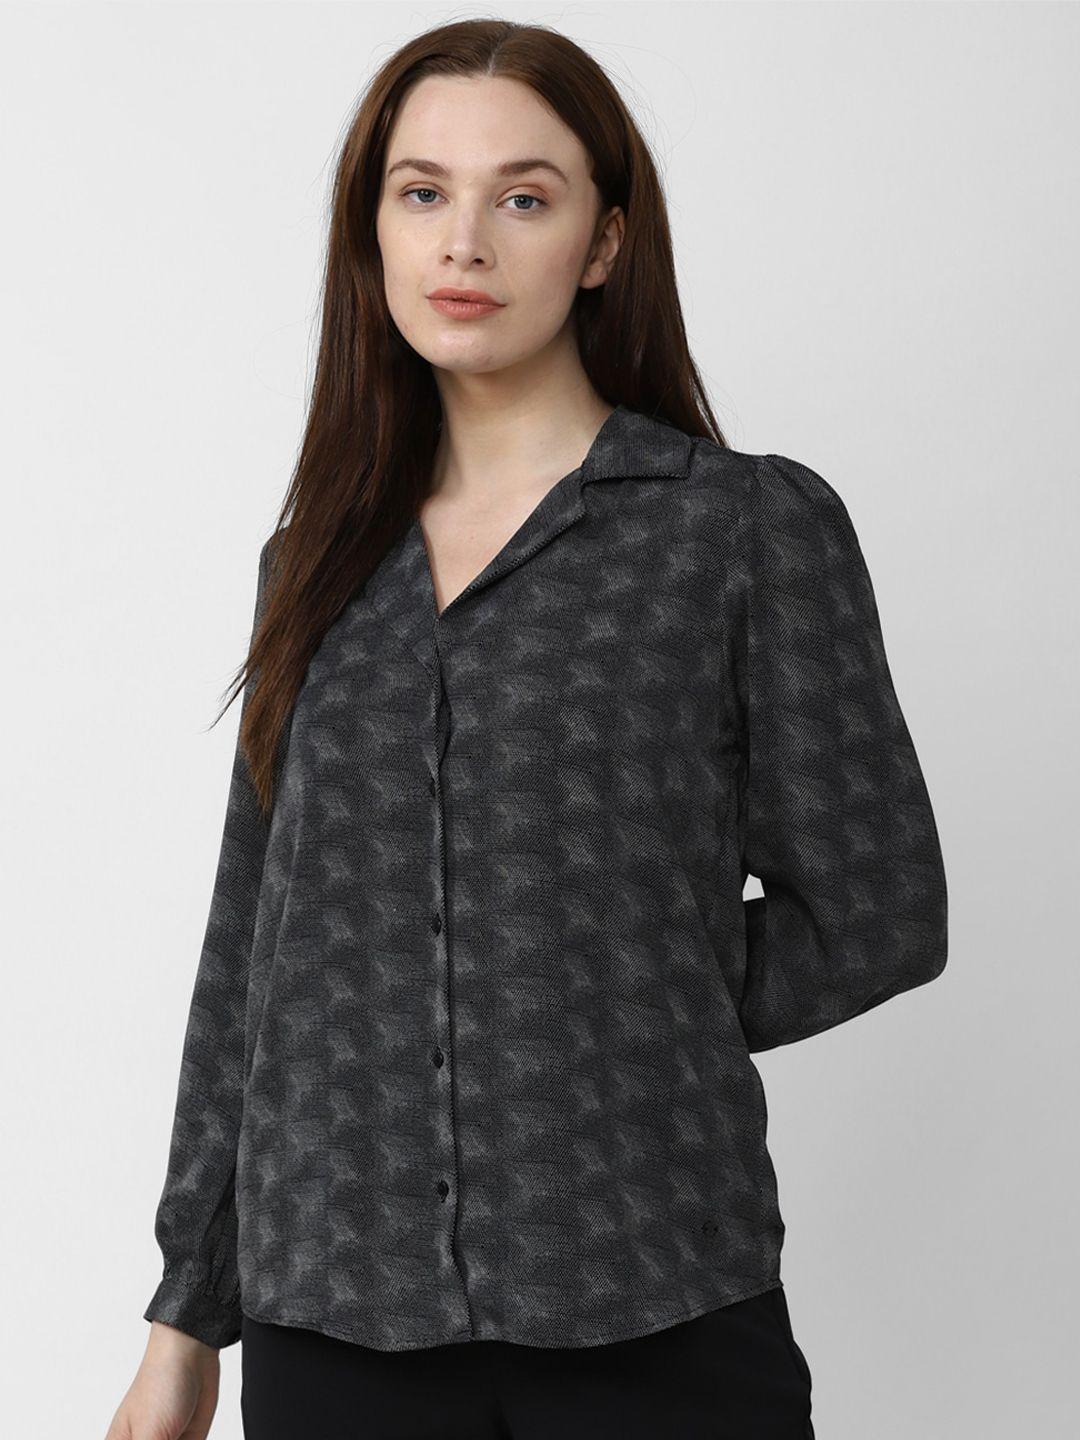 Van Heusen Woman Abstract Printed Puffed Sleeves Casual Shirt